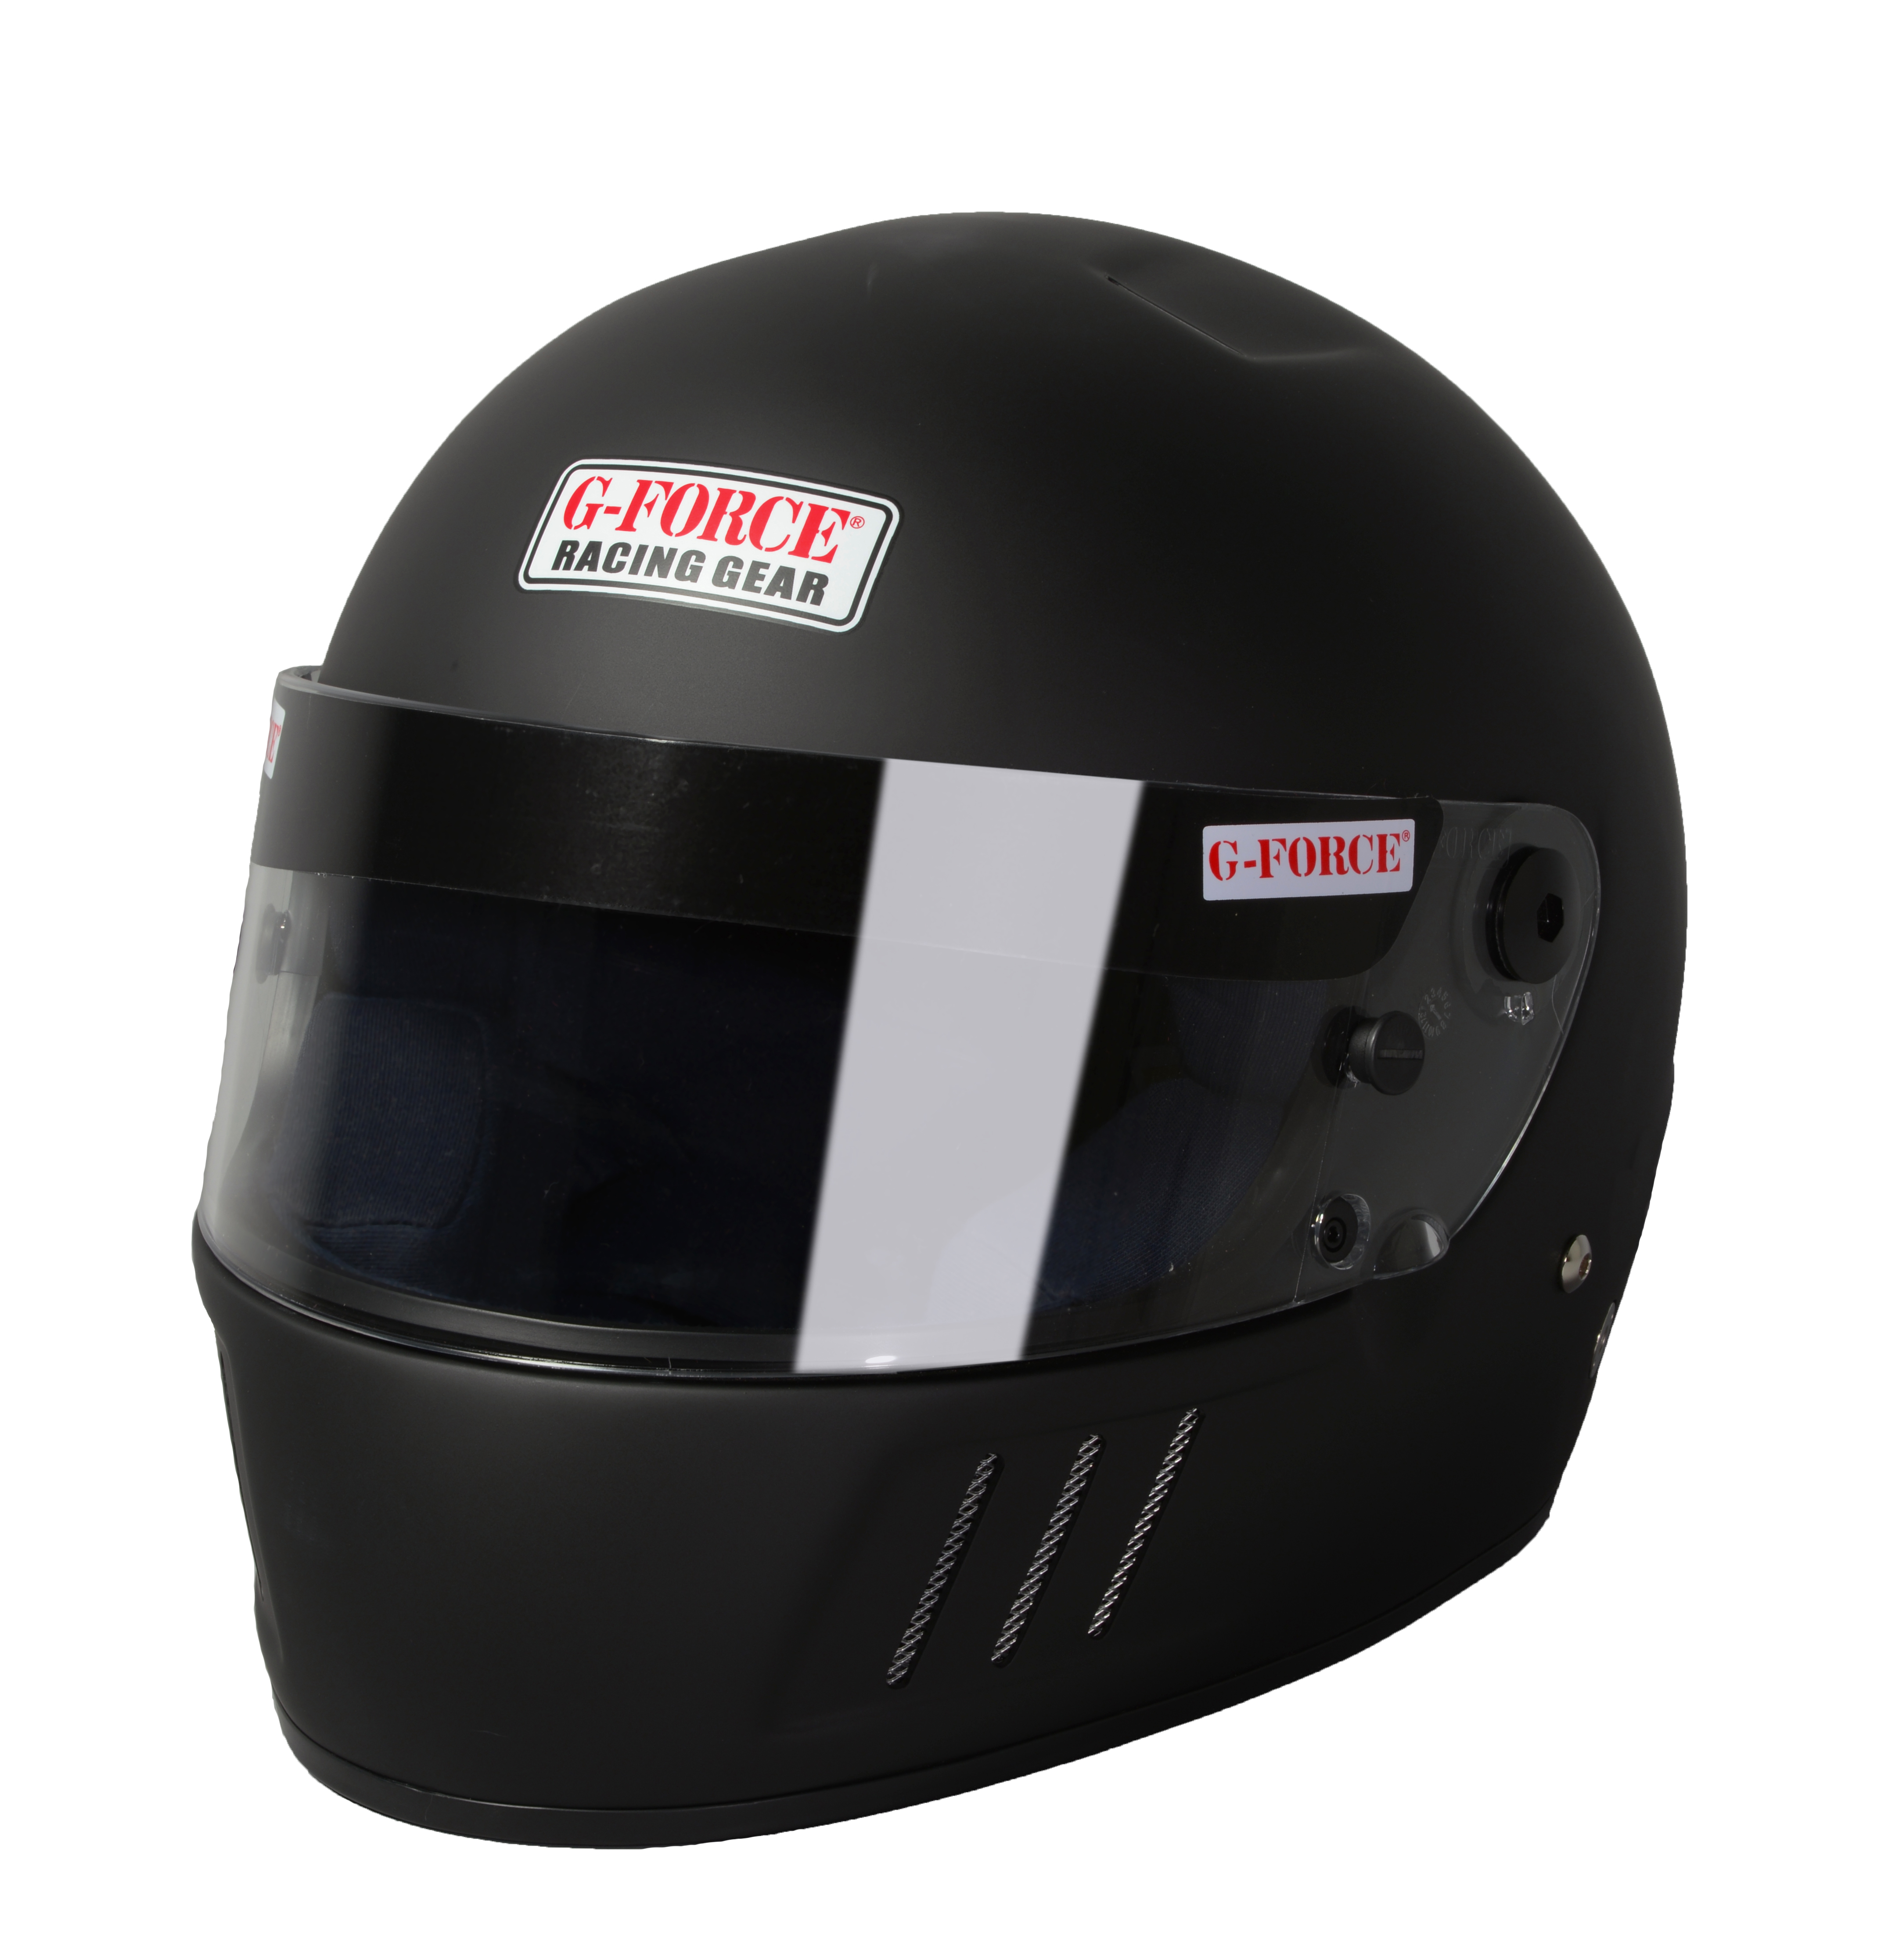 G-Force Racing Gear Helmet, PRO ELIMINATOR SA2010 FULL FACE LARGE MATTE